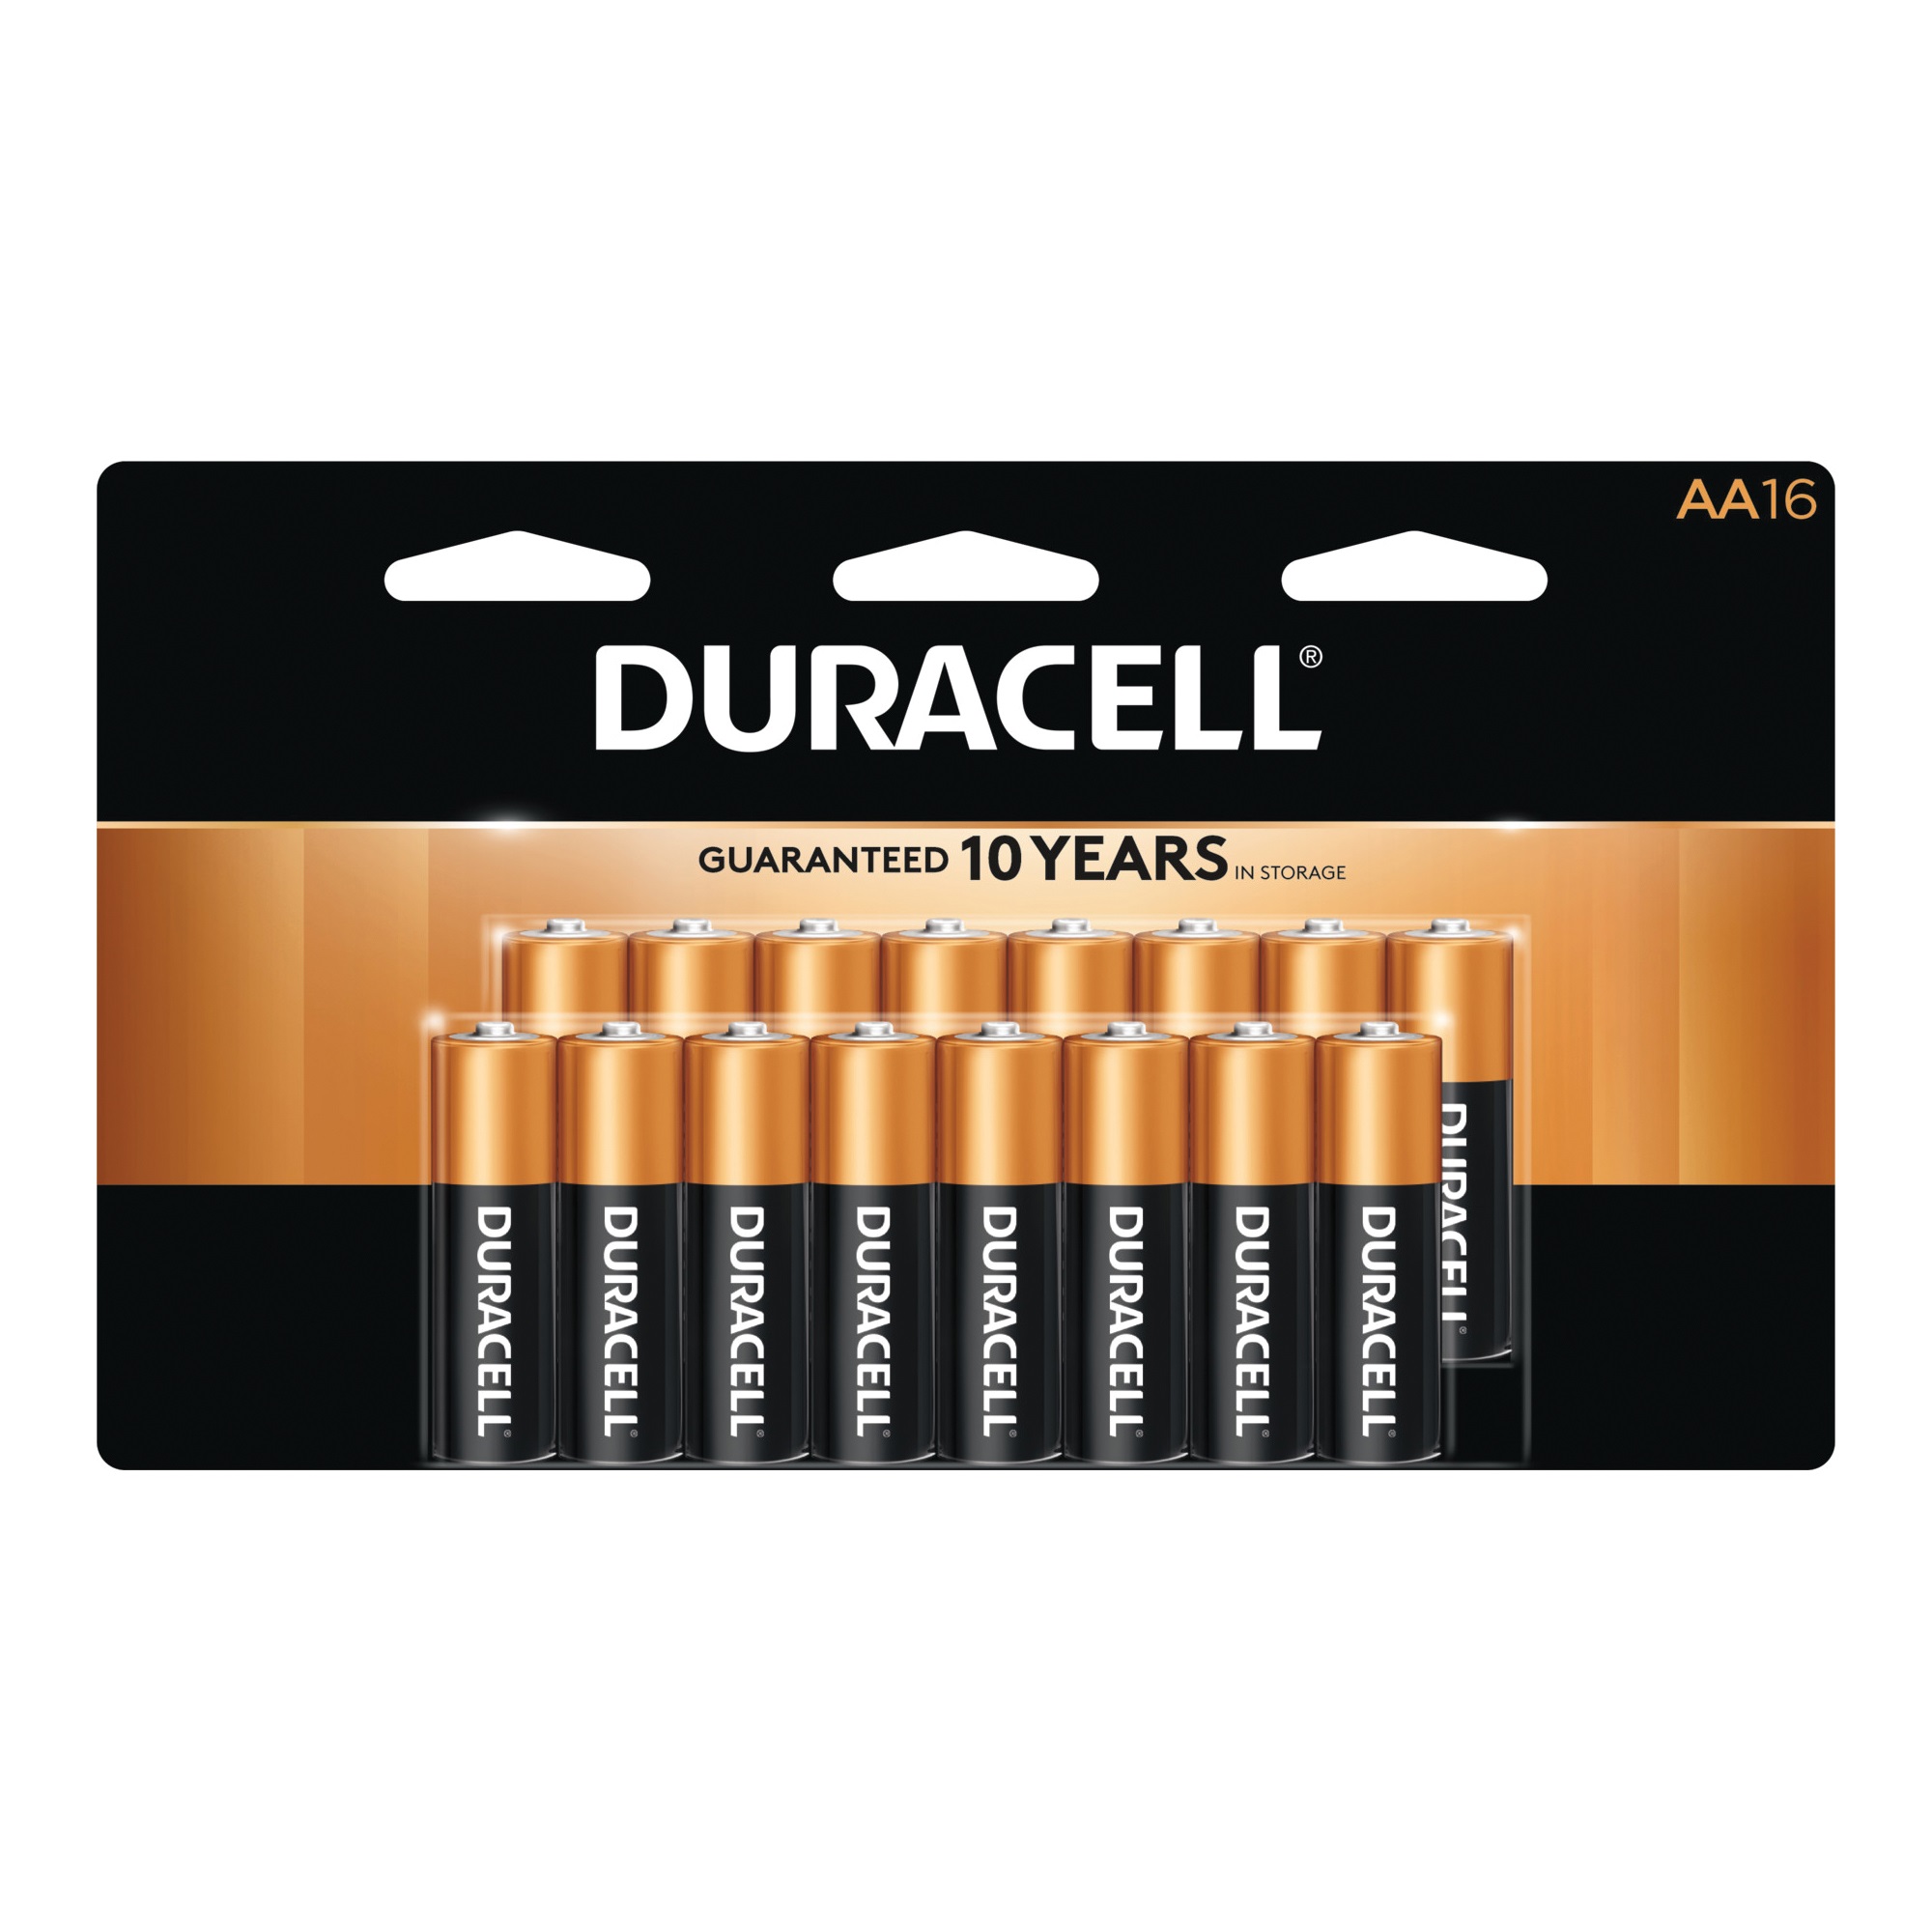 DURACELL COPPERTOP MN1500 Series MN1500B16 Alkaline Battery, 1.5 V Battery, AA Battery, Manganese Dioxide - 1